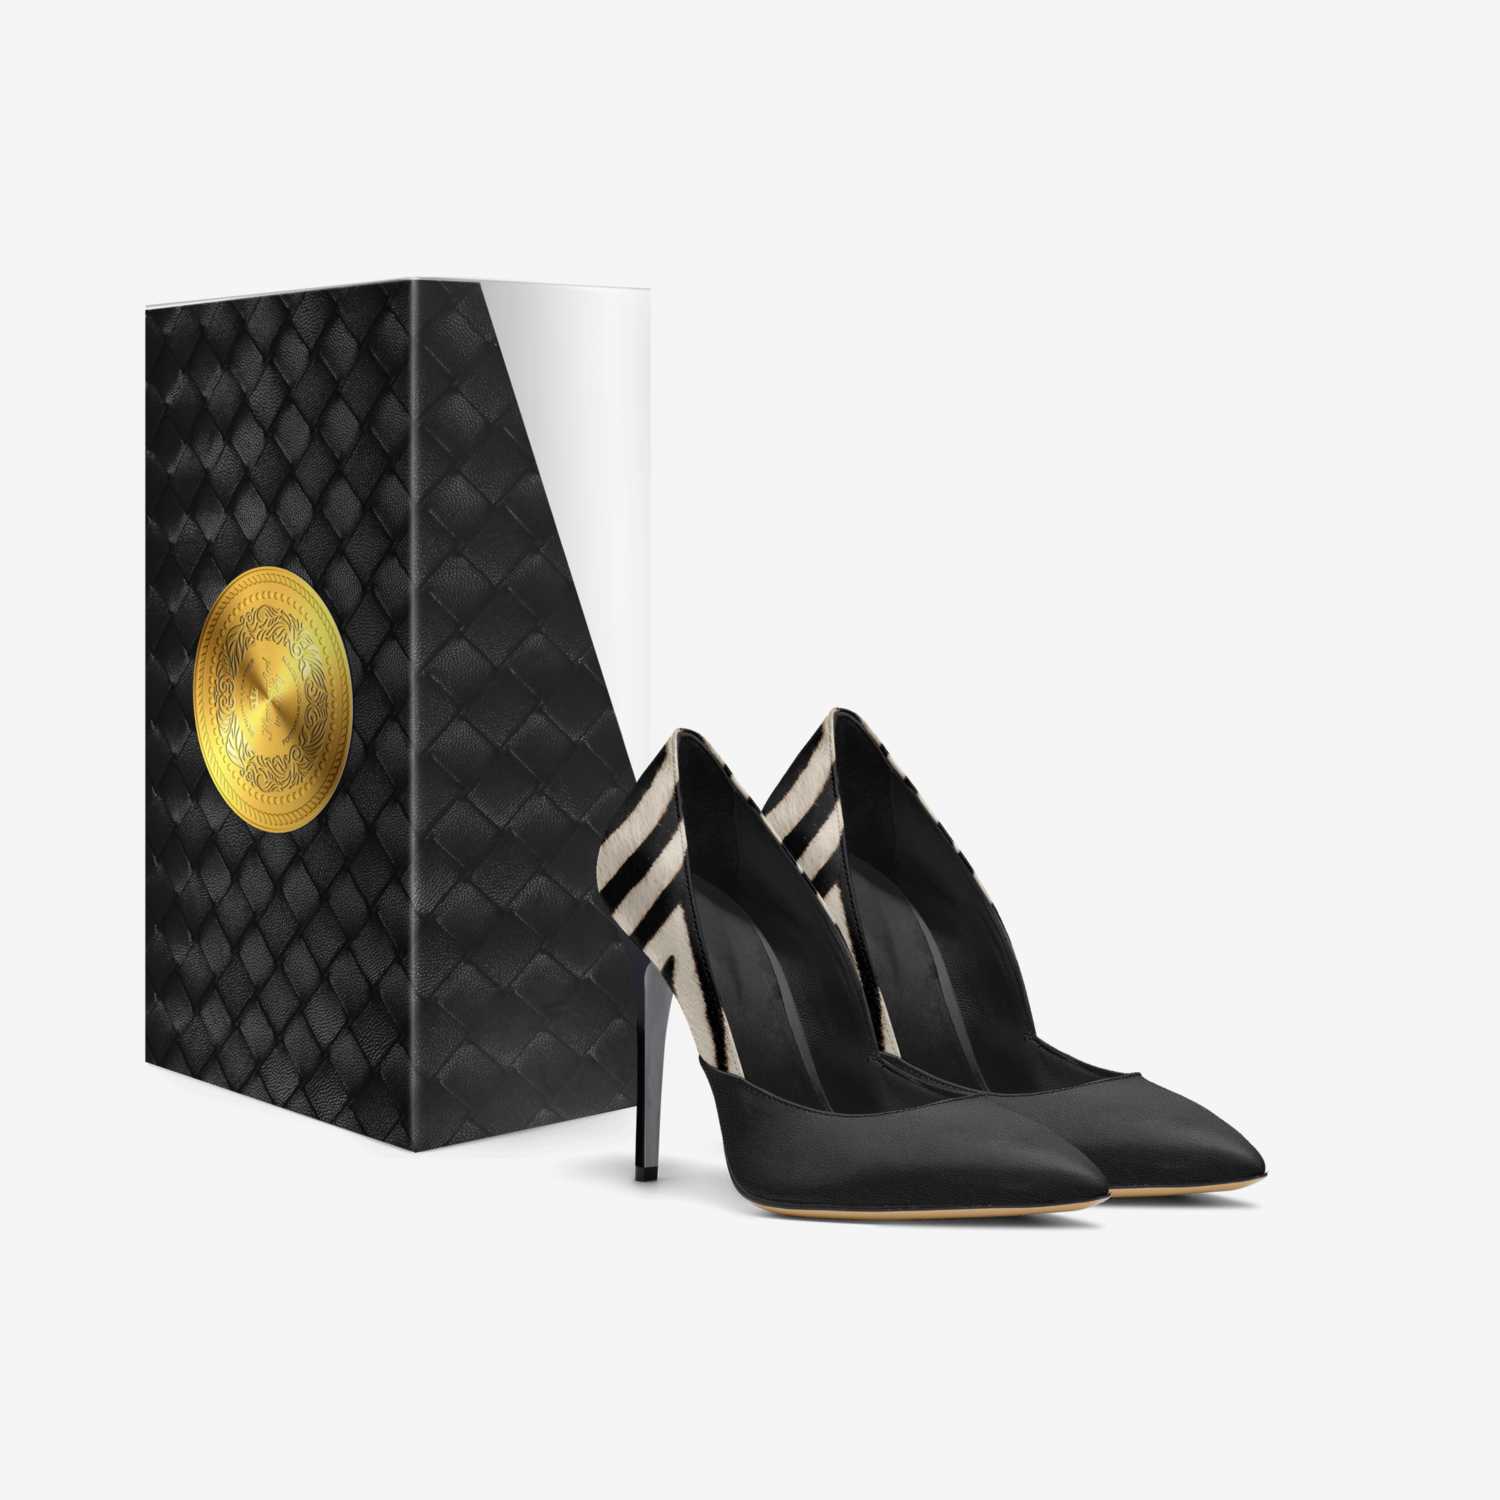 Kapture custom made in Italy shoes by Karonda Edwards | Box view